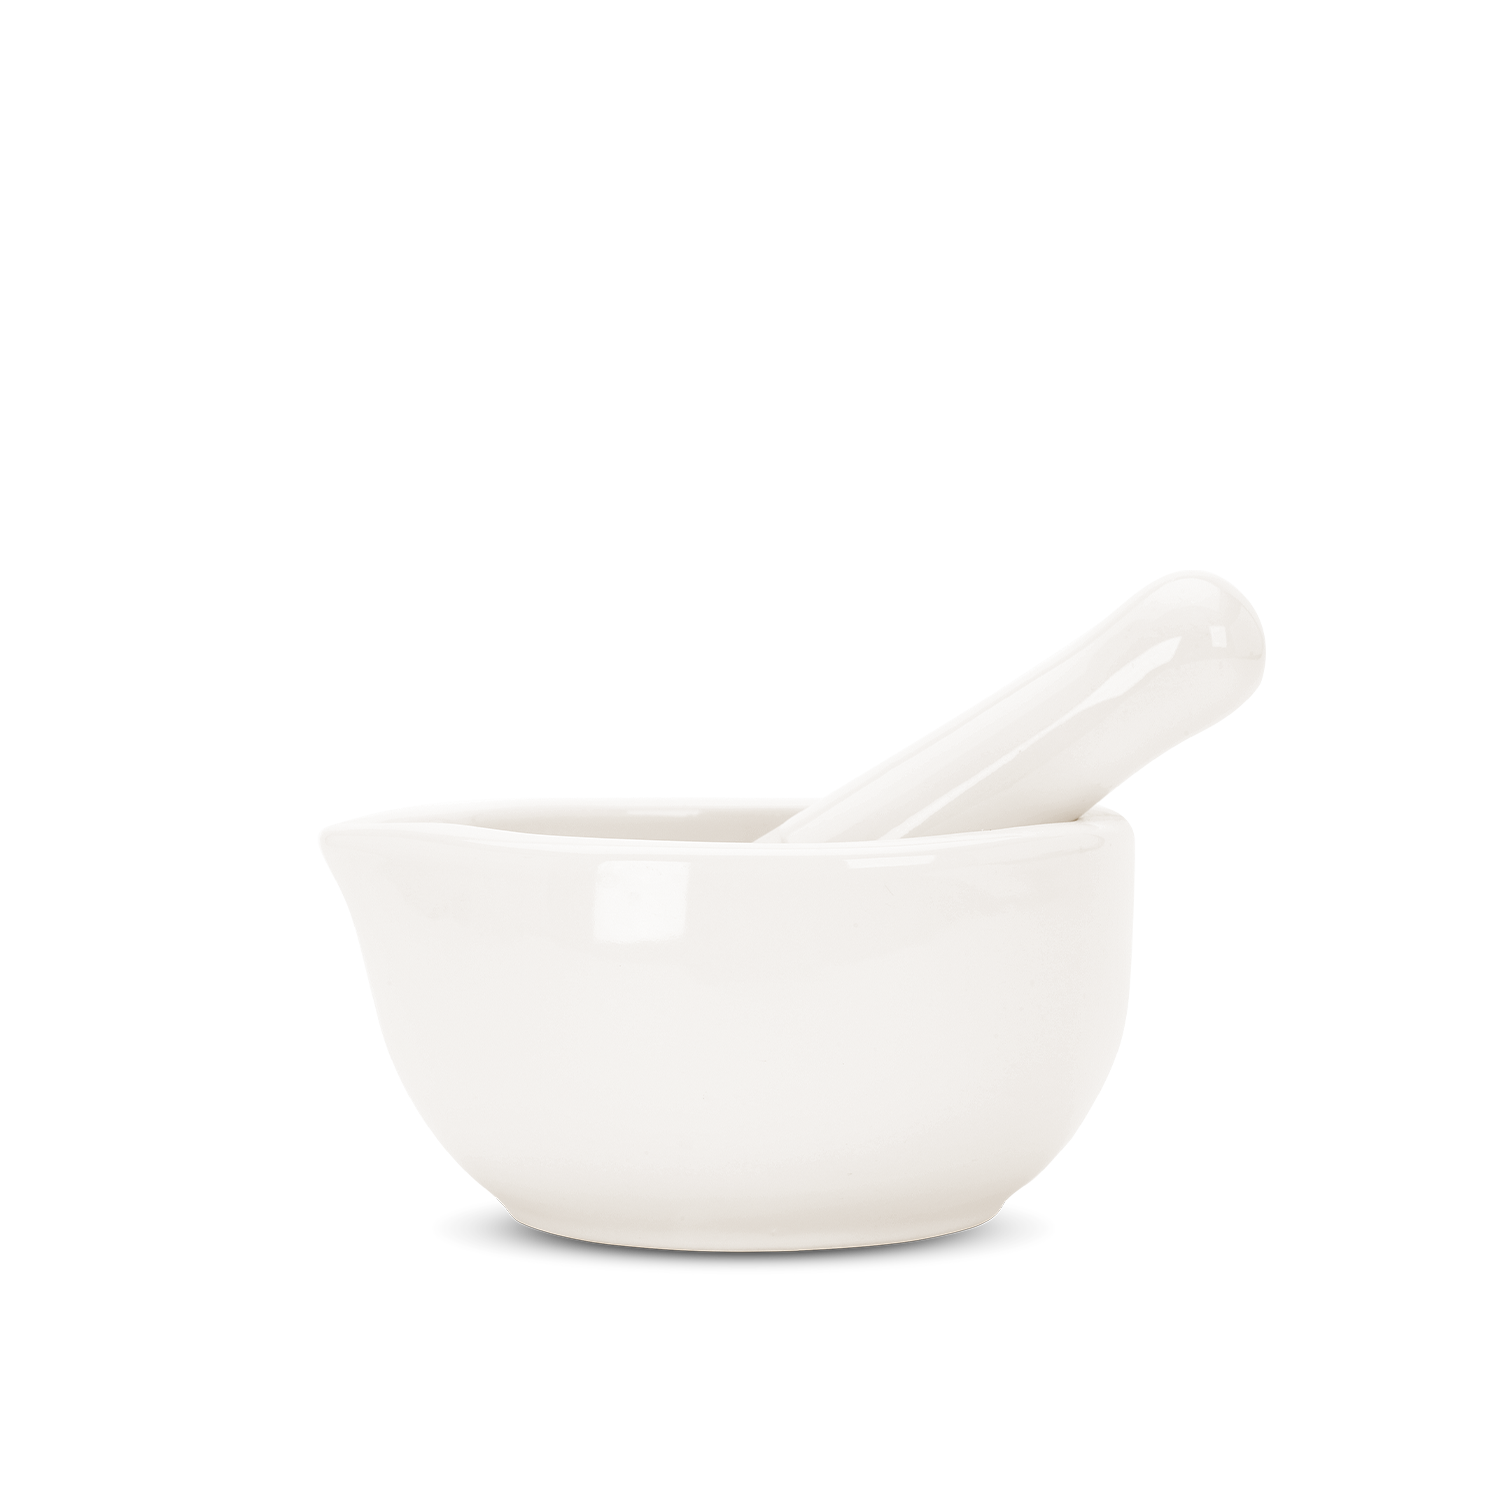 MORTAR AND PESTLE - Treatment bowl